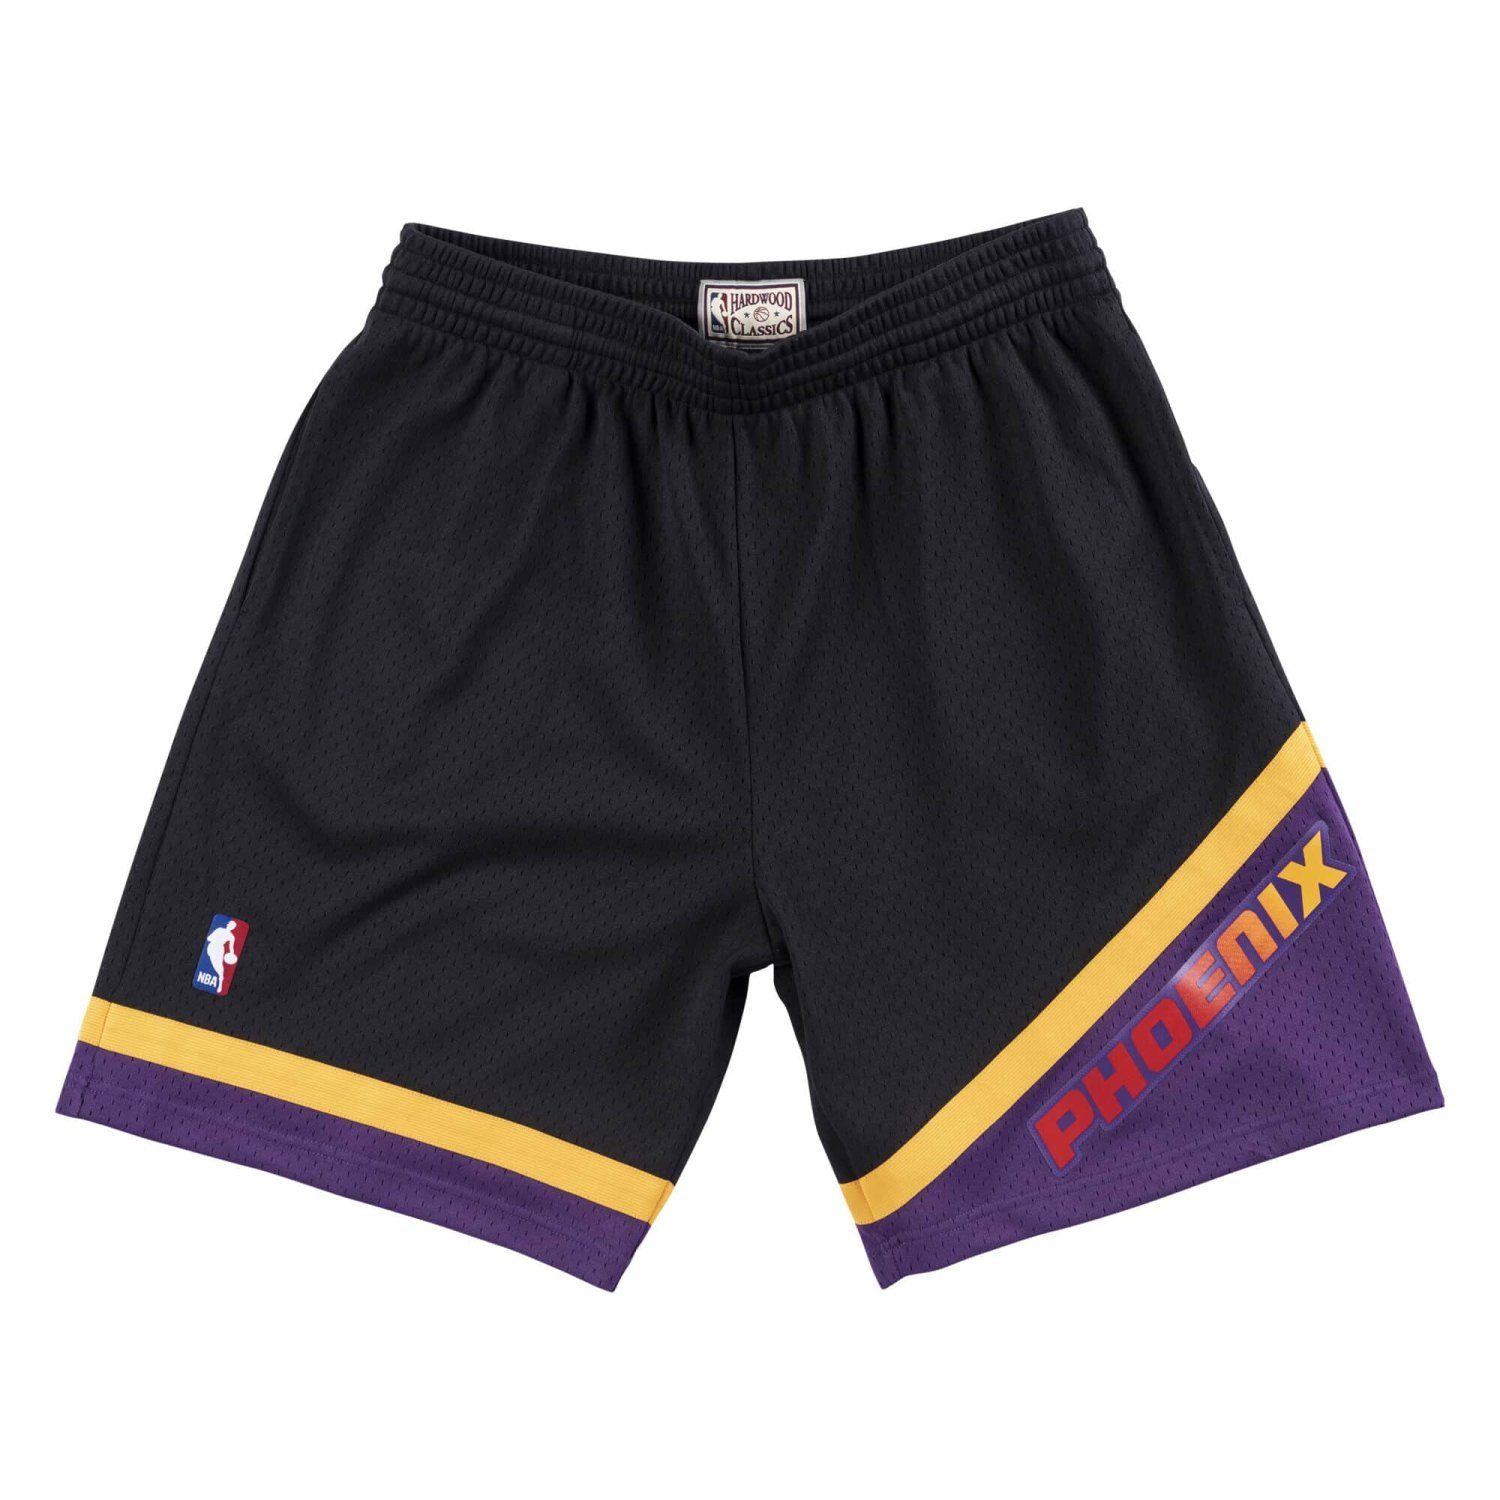 verbilligt Mitchell & Ness Shorts Alternate Phoenix Suns Swingman NBA 199900